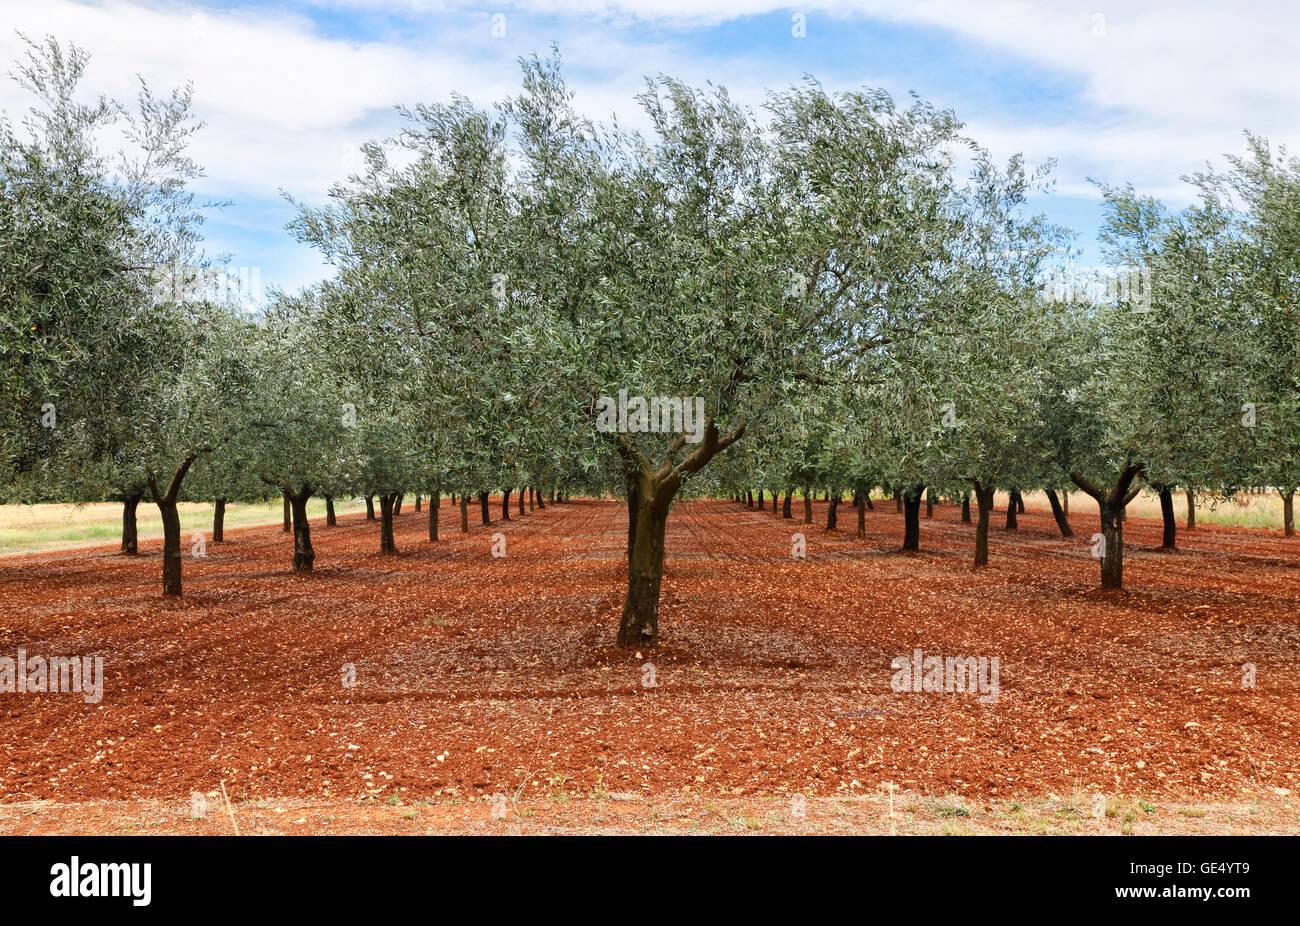 Olive tree plantation. Olive trees in a row. Stock Photo